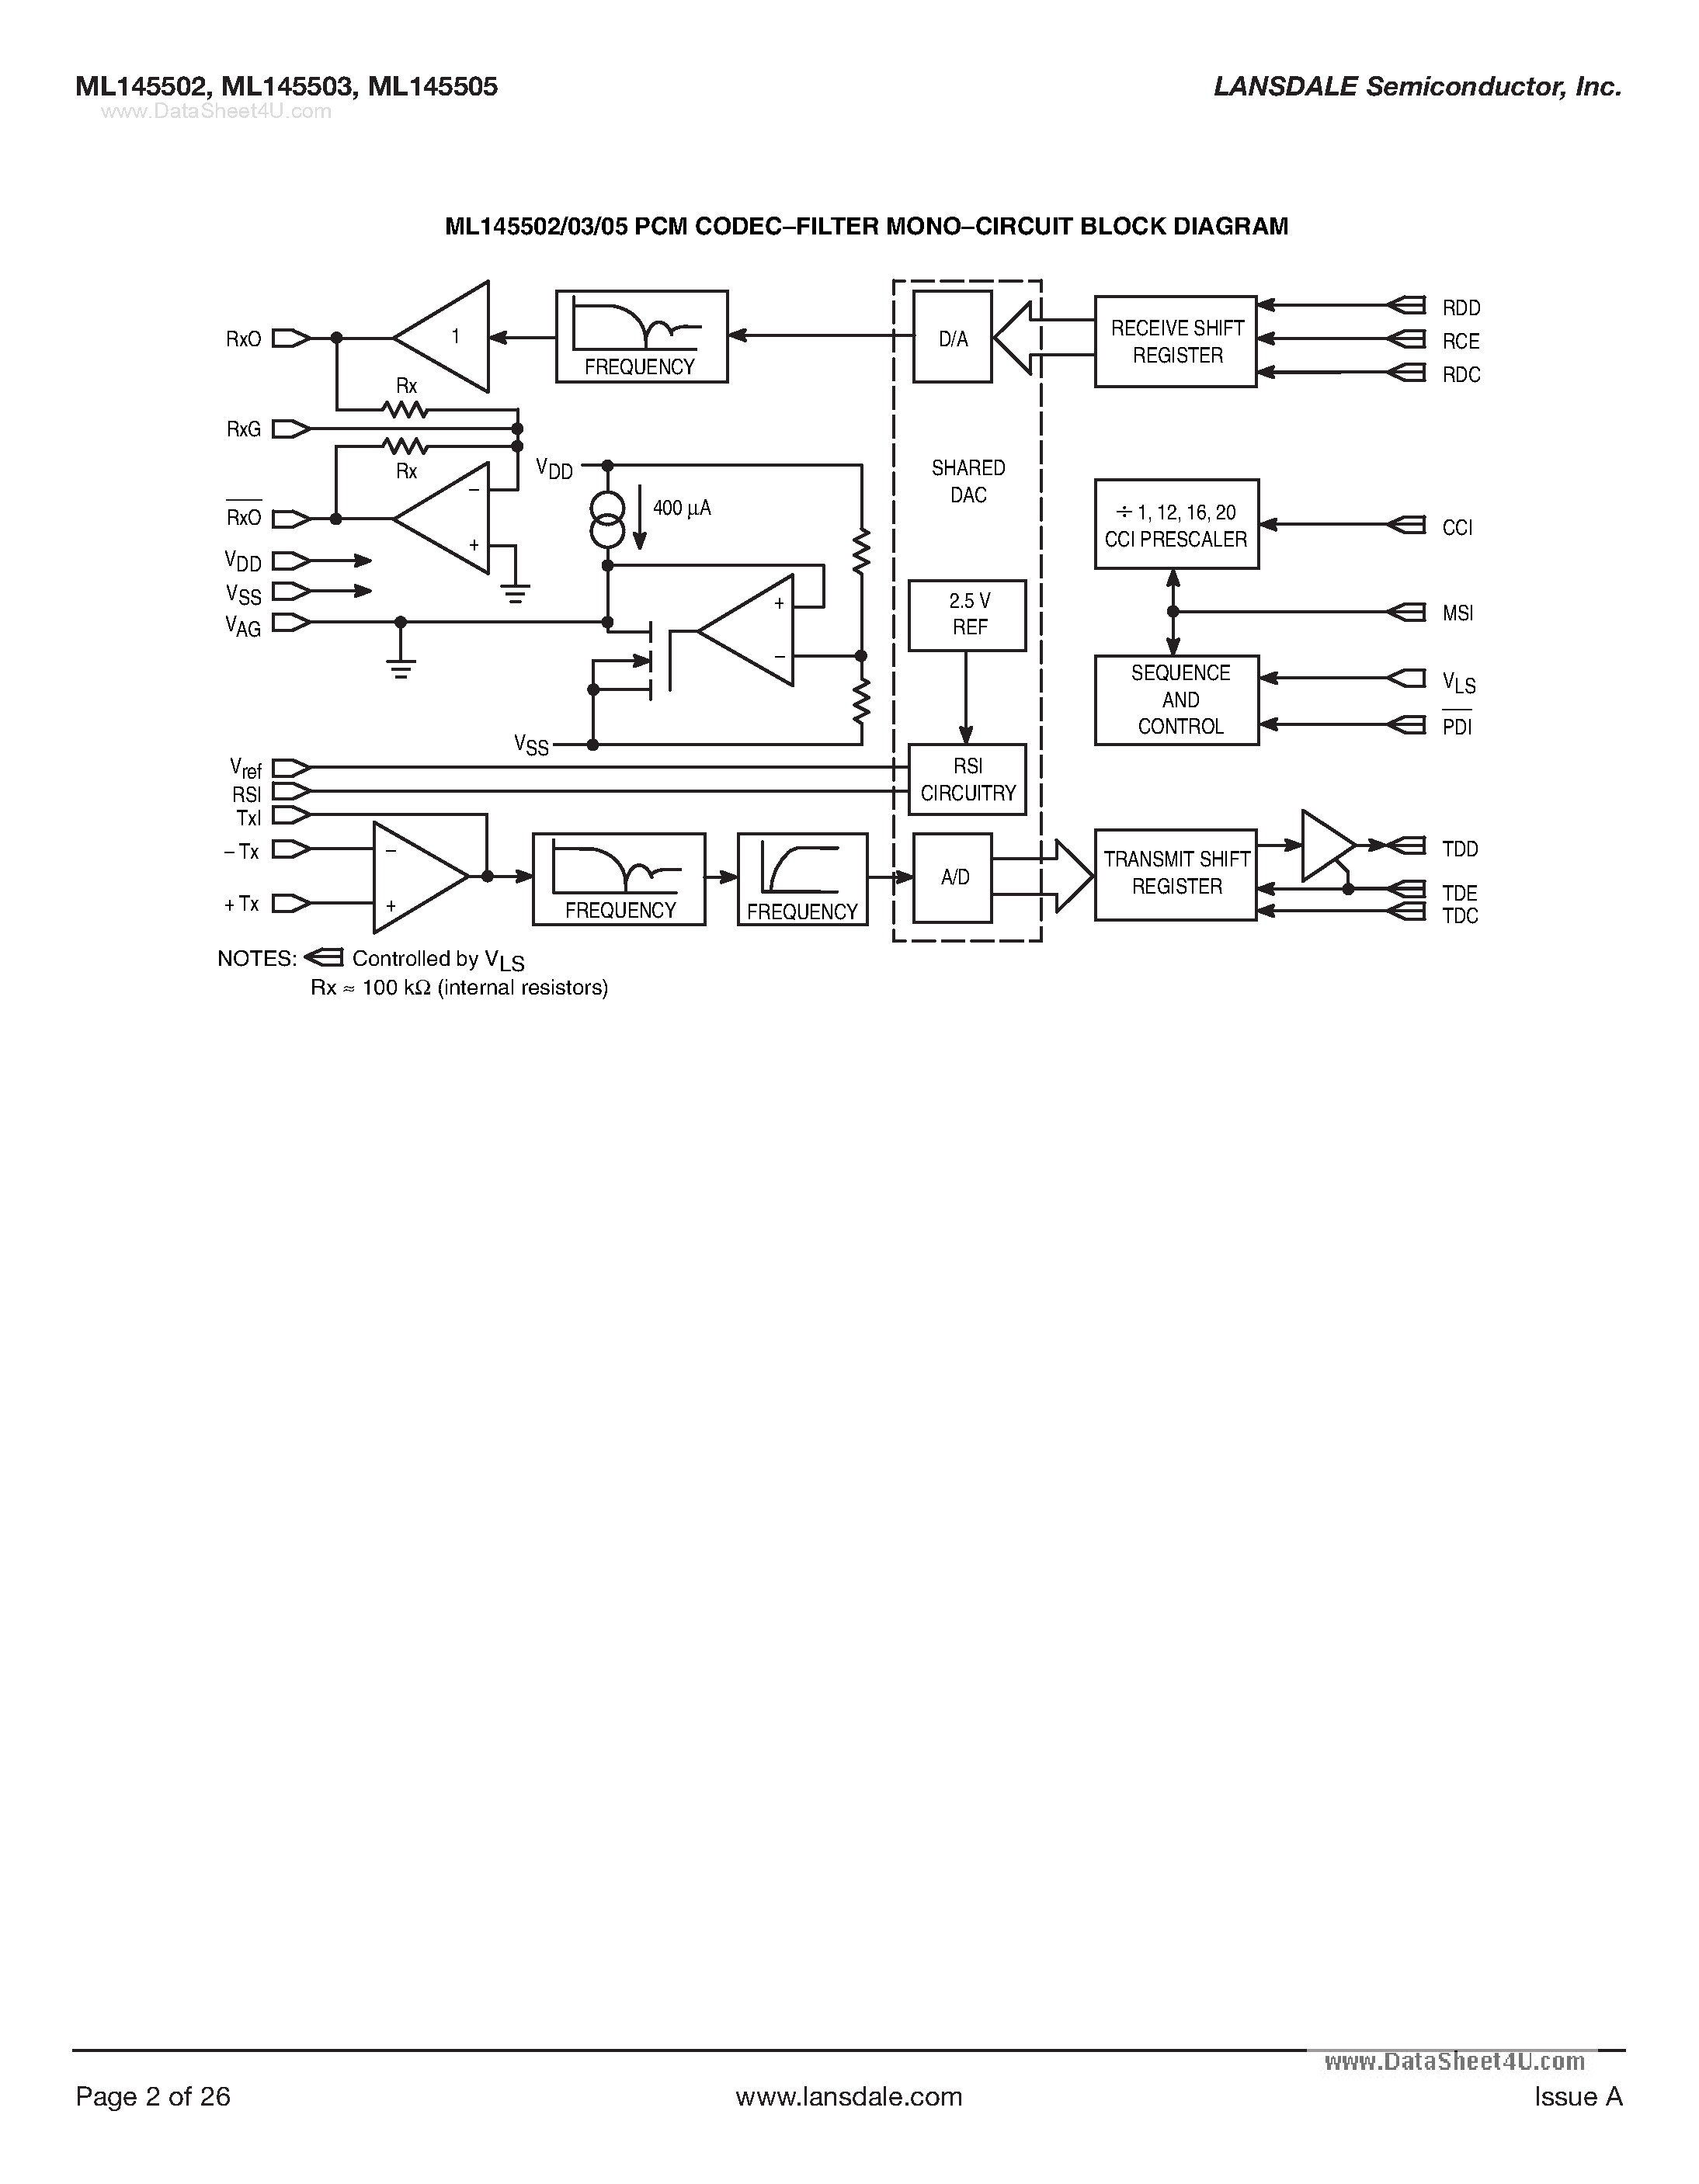 Даташит ML145502 - (ML145502 - ML145505) PCM Codec-Filter Mono-Circuit страница 2